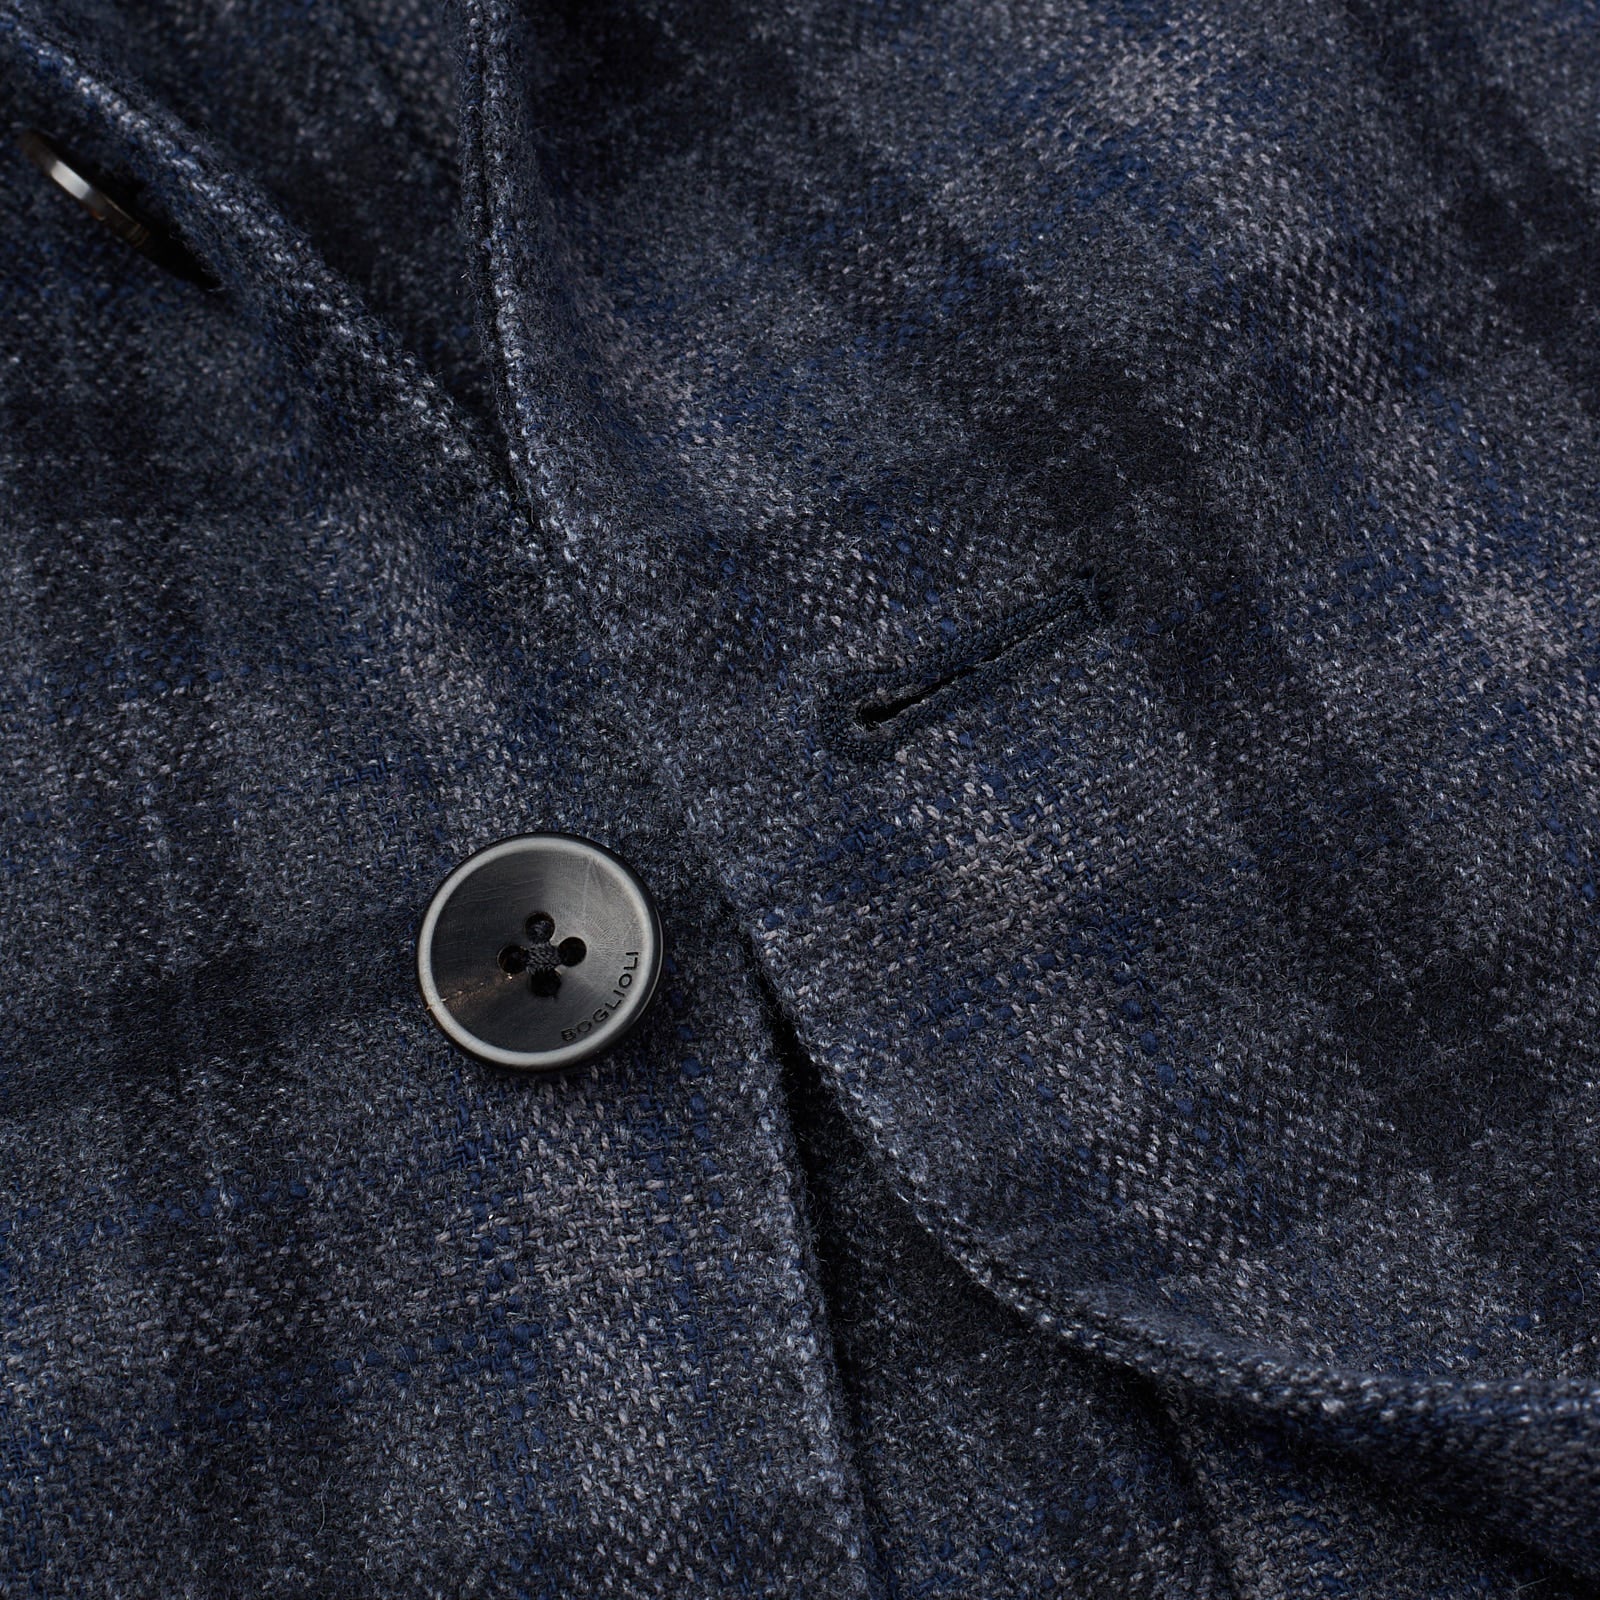 BOGLIOLI "K.Jacket" Gray Plaid Cashmere-Wool-Cotton Unlined Jacket EU 50 NEW US 40 BOGLIOLI